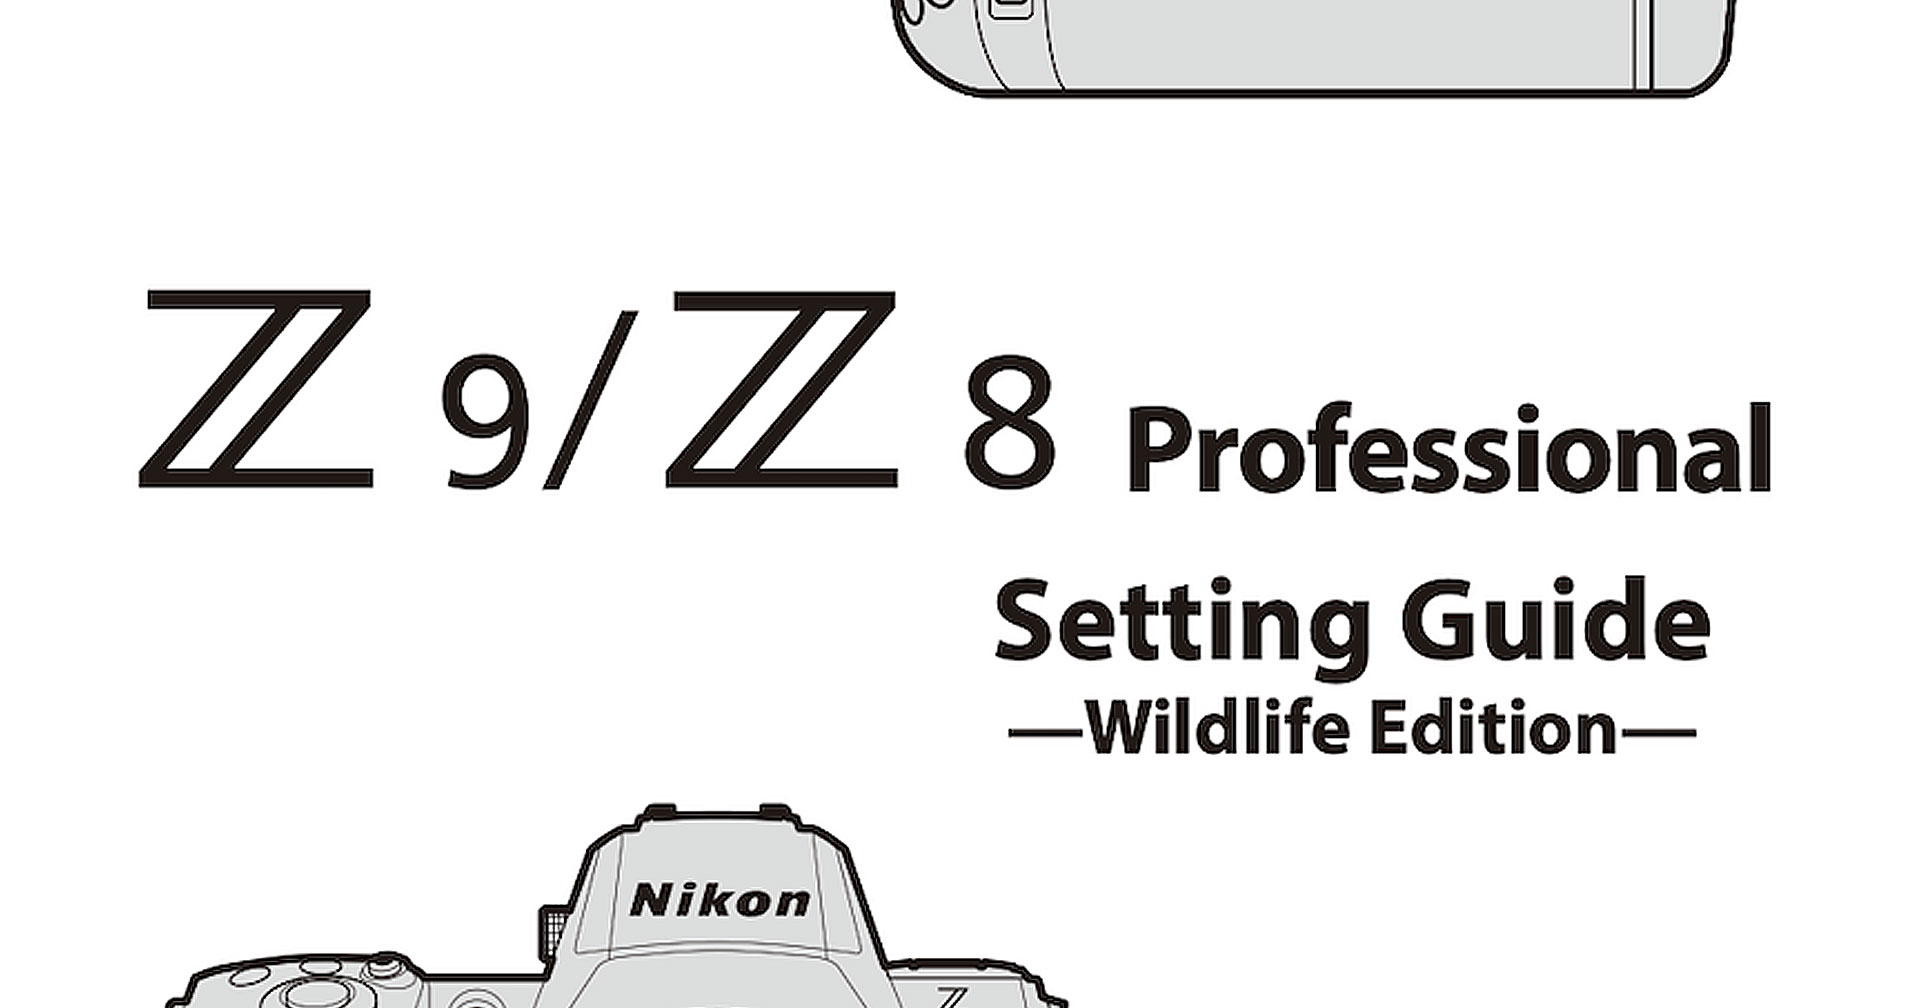 Nikon ปล่อยคู่มือ ‘Wildlife Edition’ ตั้งค่ากล้องถ่ายสัตว์ป่าแบบมืออาชีพ สำหรับรุ่น Z9/Z8